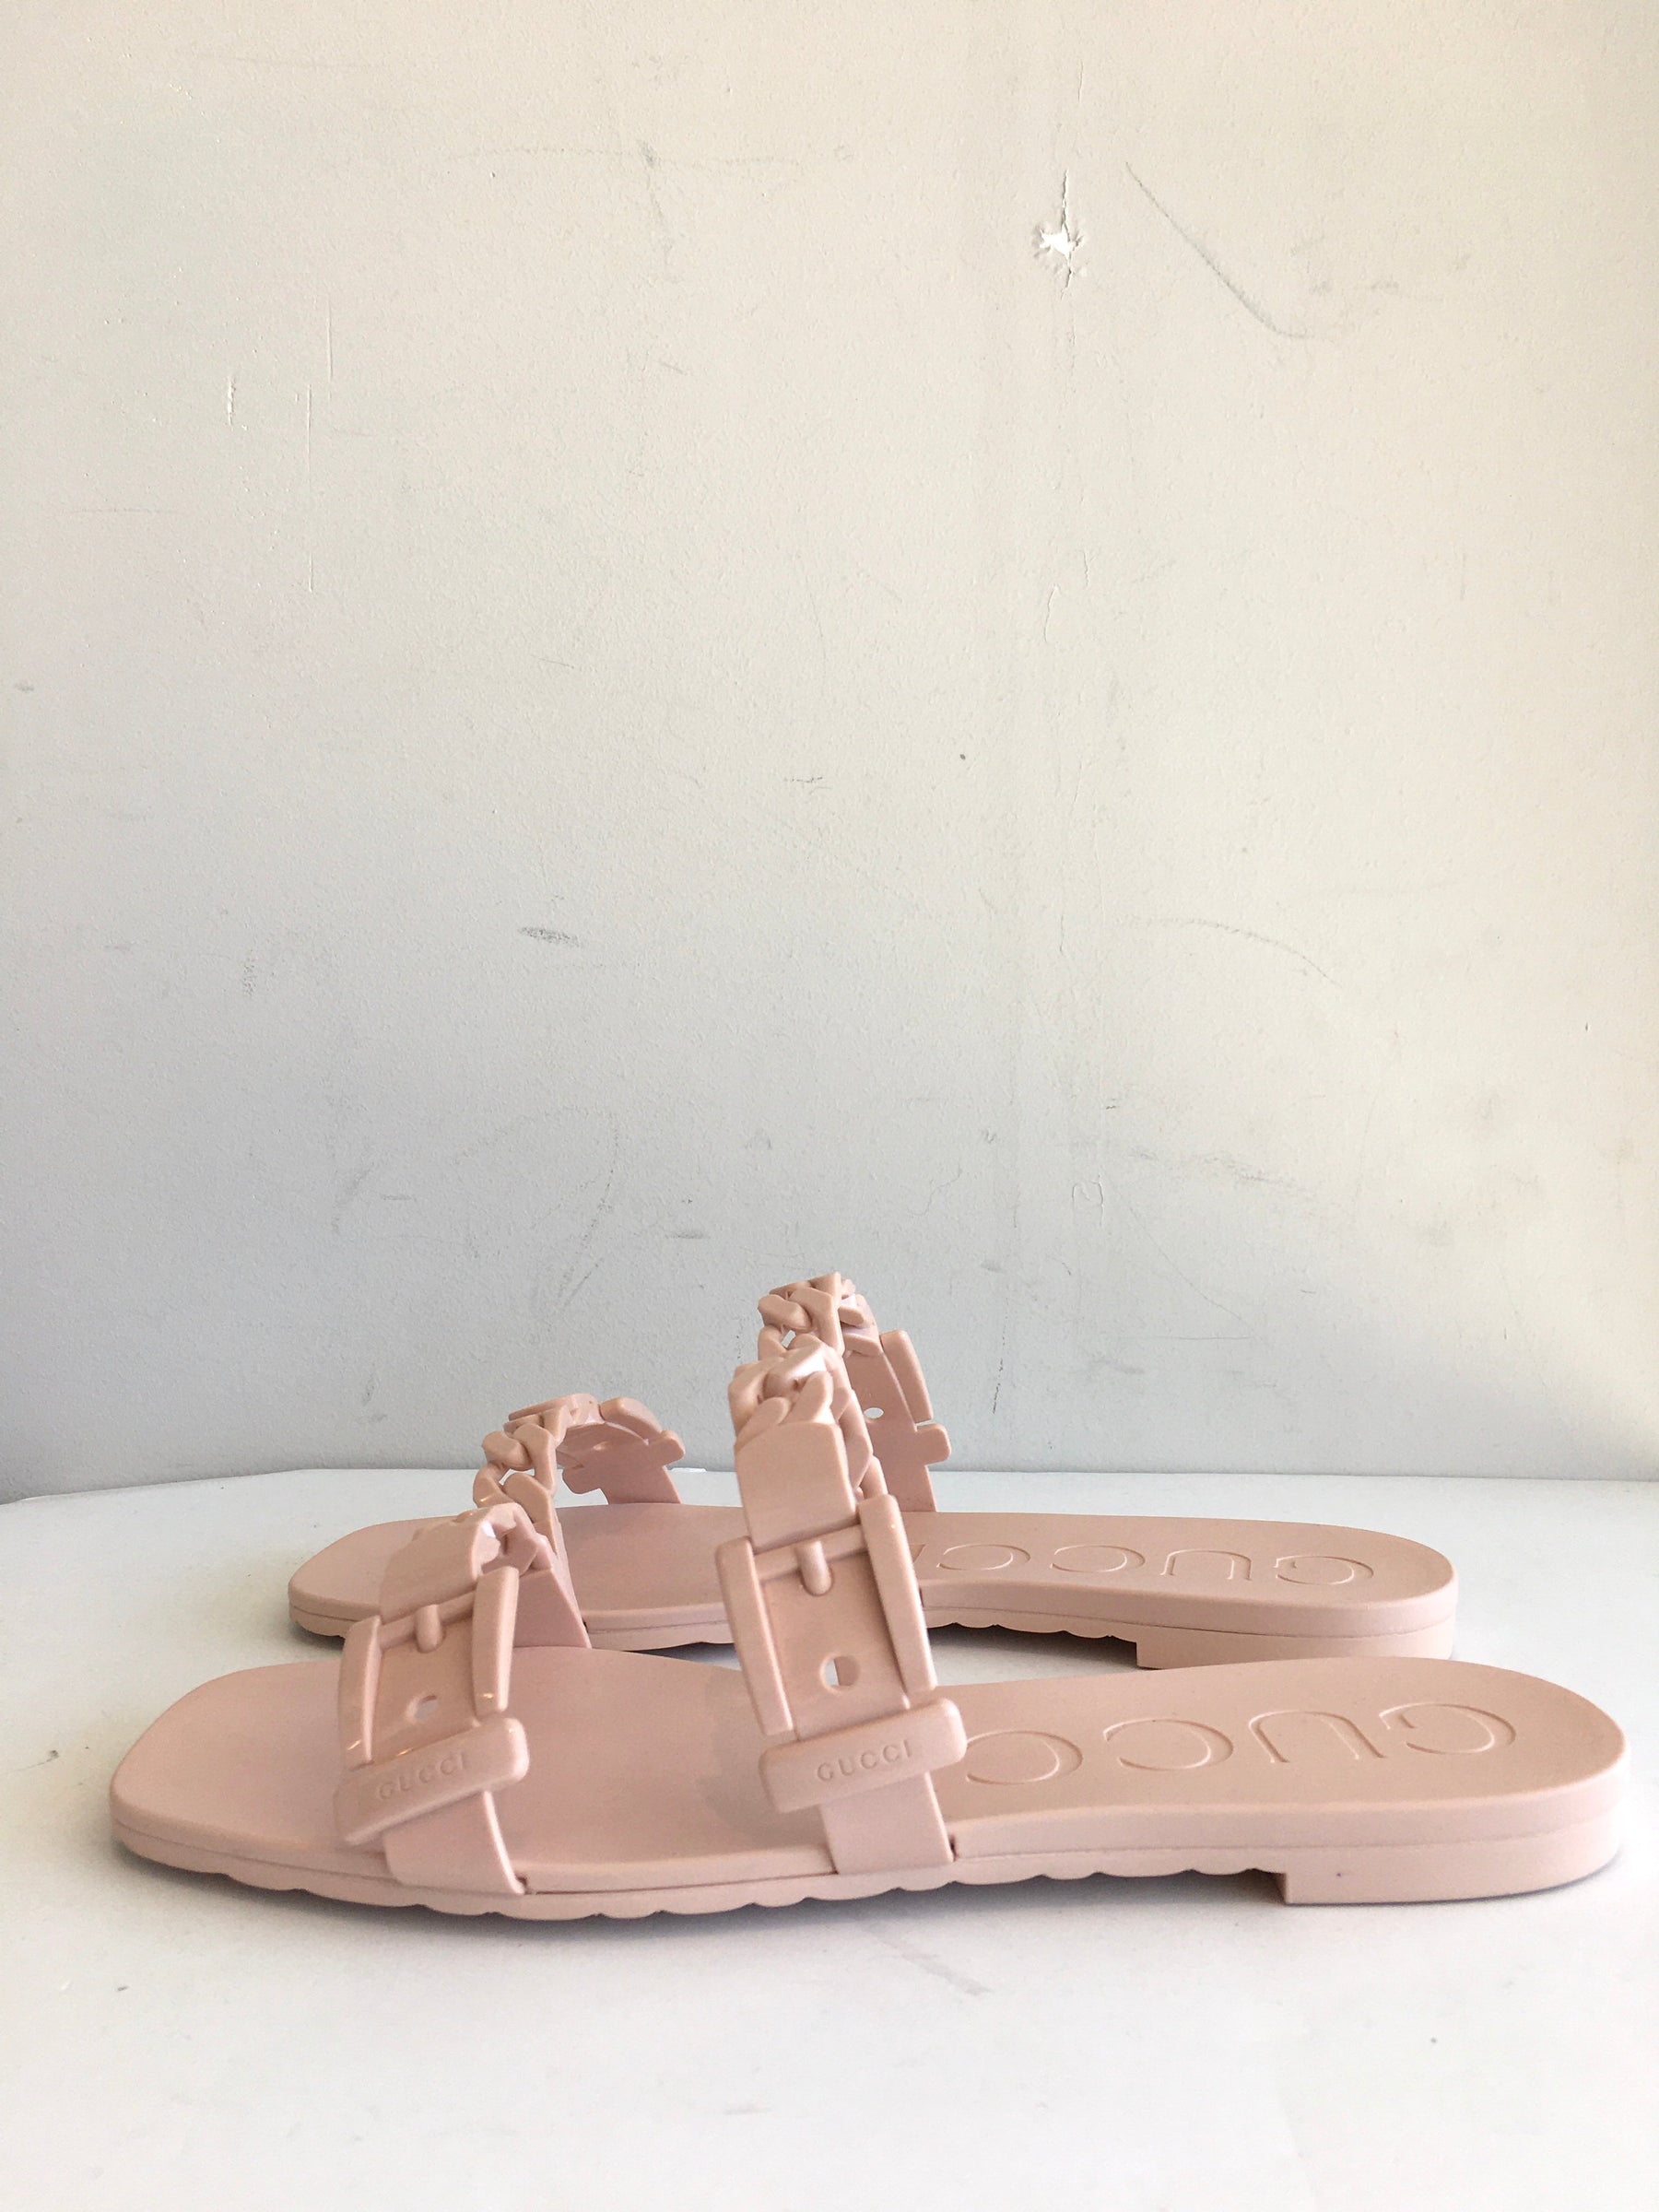 Gucci Light Pink Jelly Rubber Slide Sandals